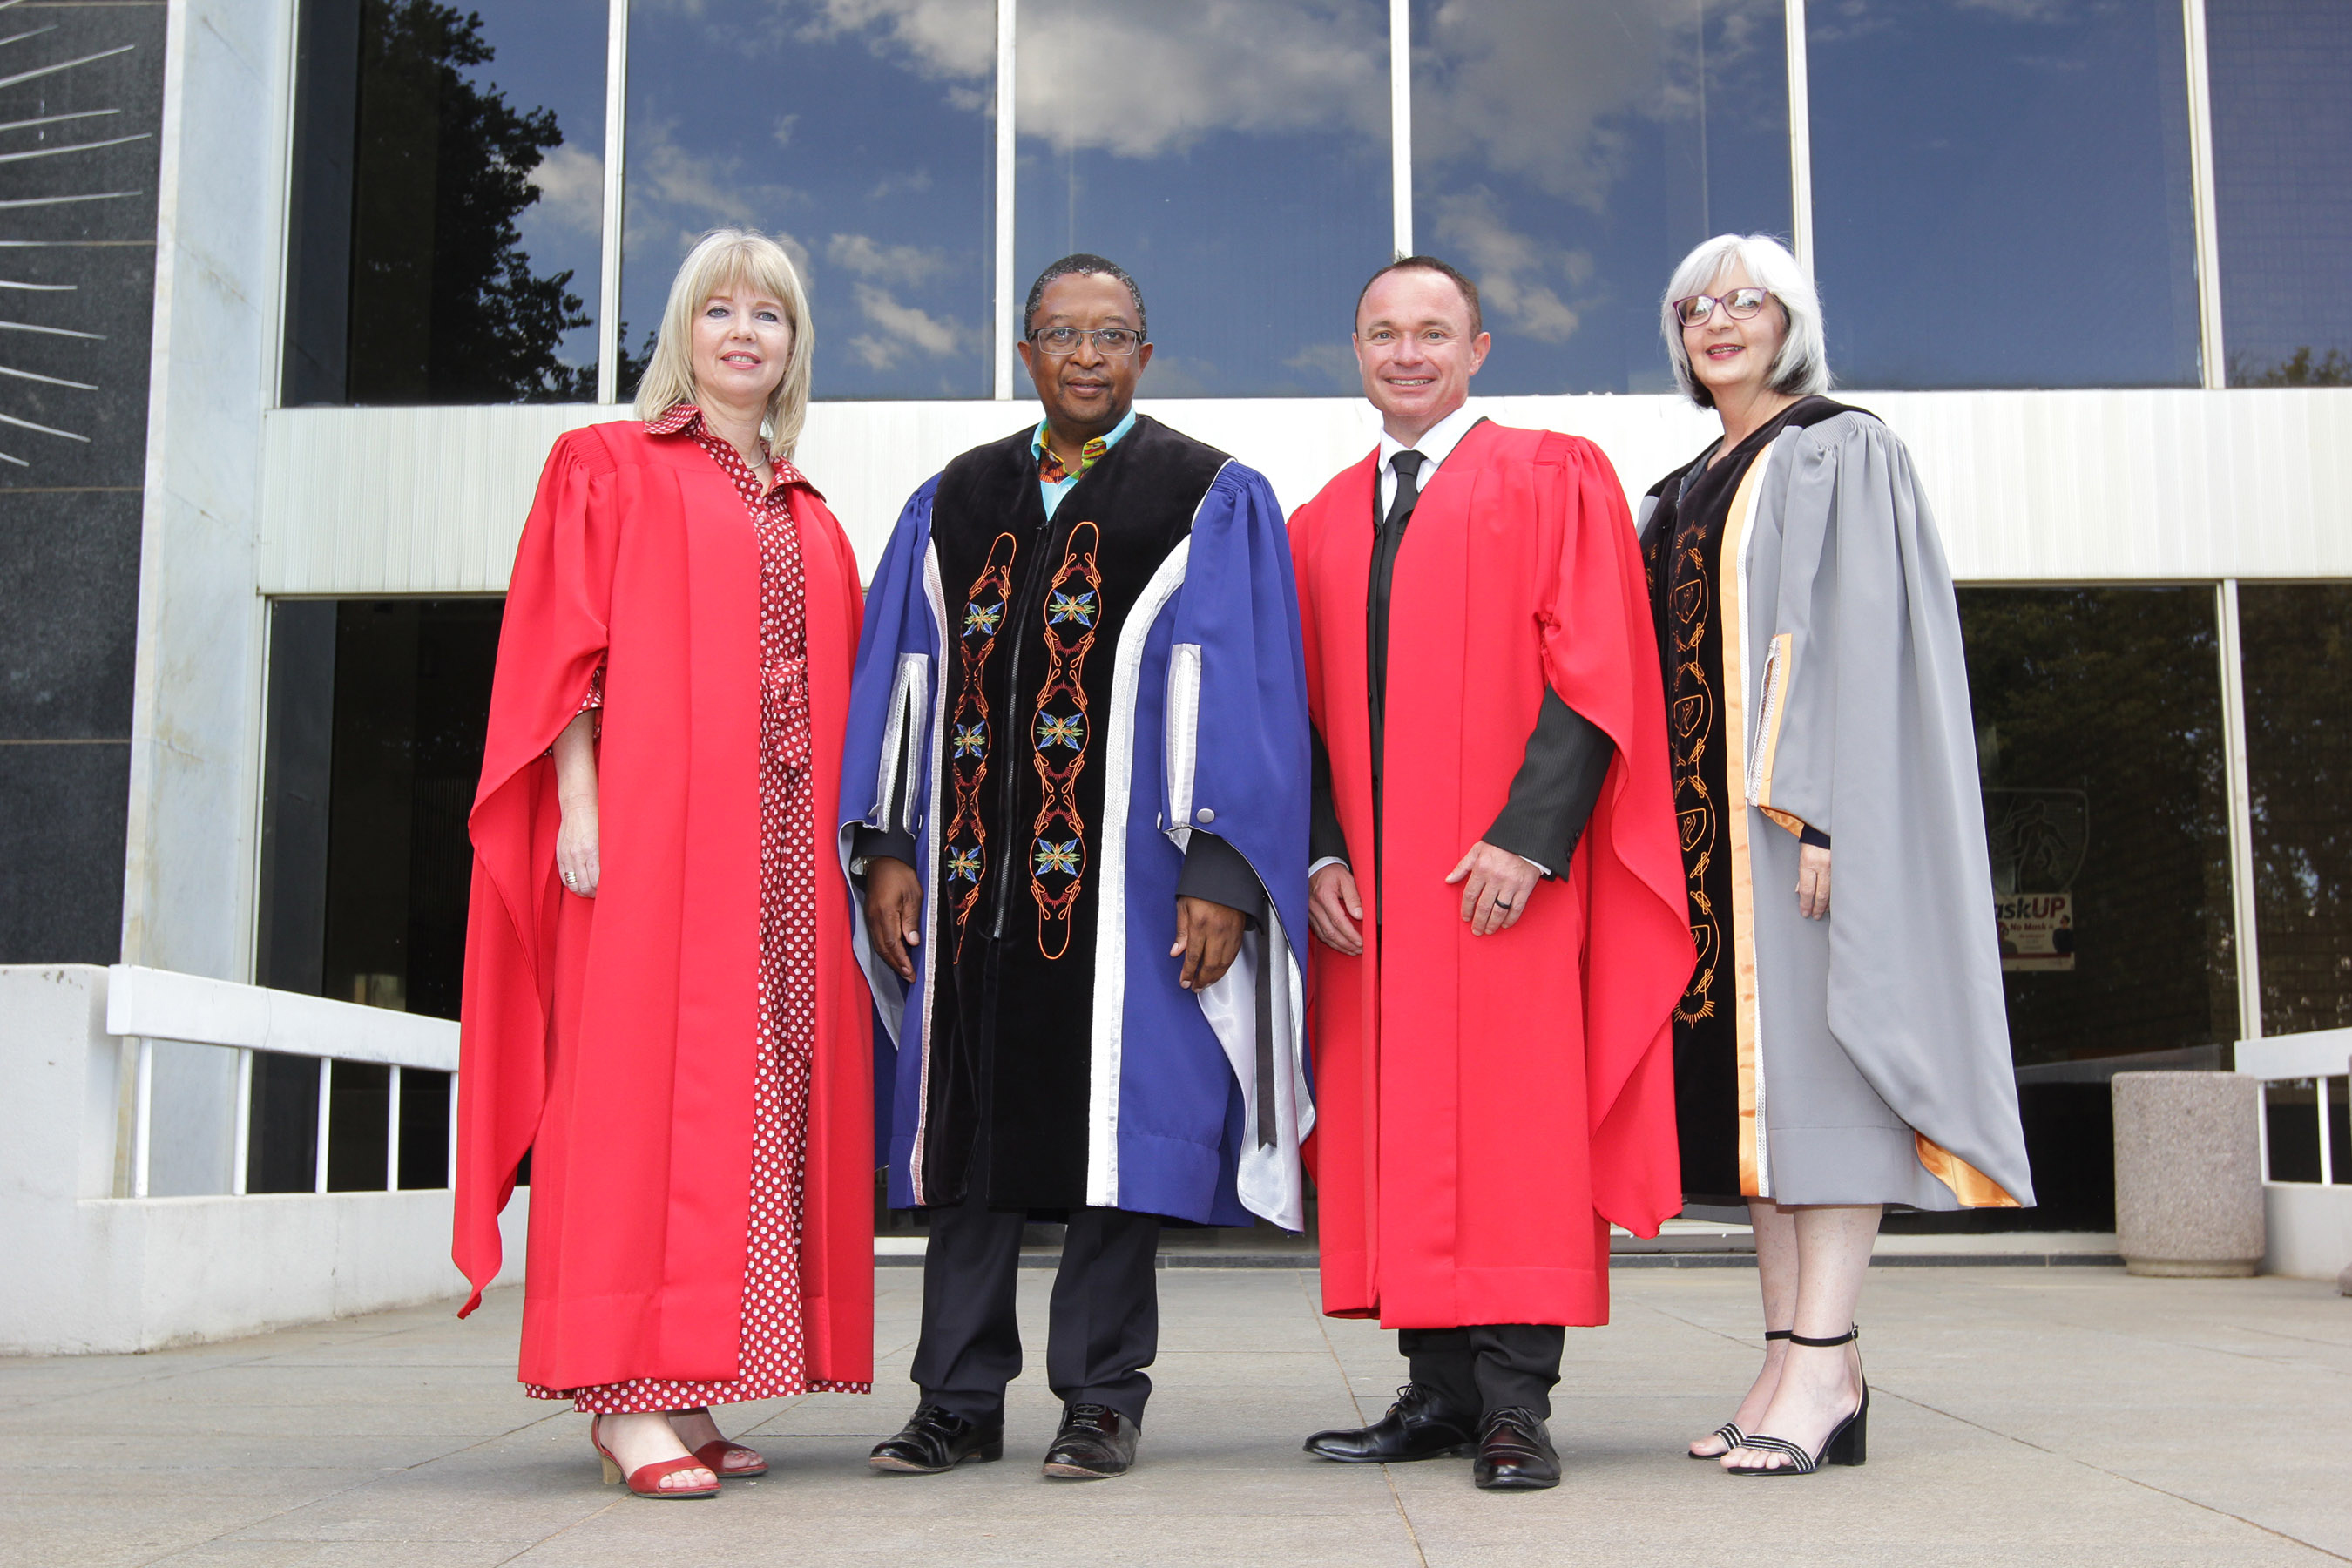 From the left: Prof Angelique van Niekerk, Dr Molapo Qhobela, Jaco Jacobs, and Prof Heidi Hudson.